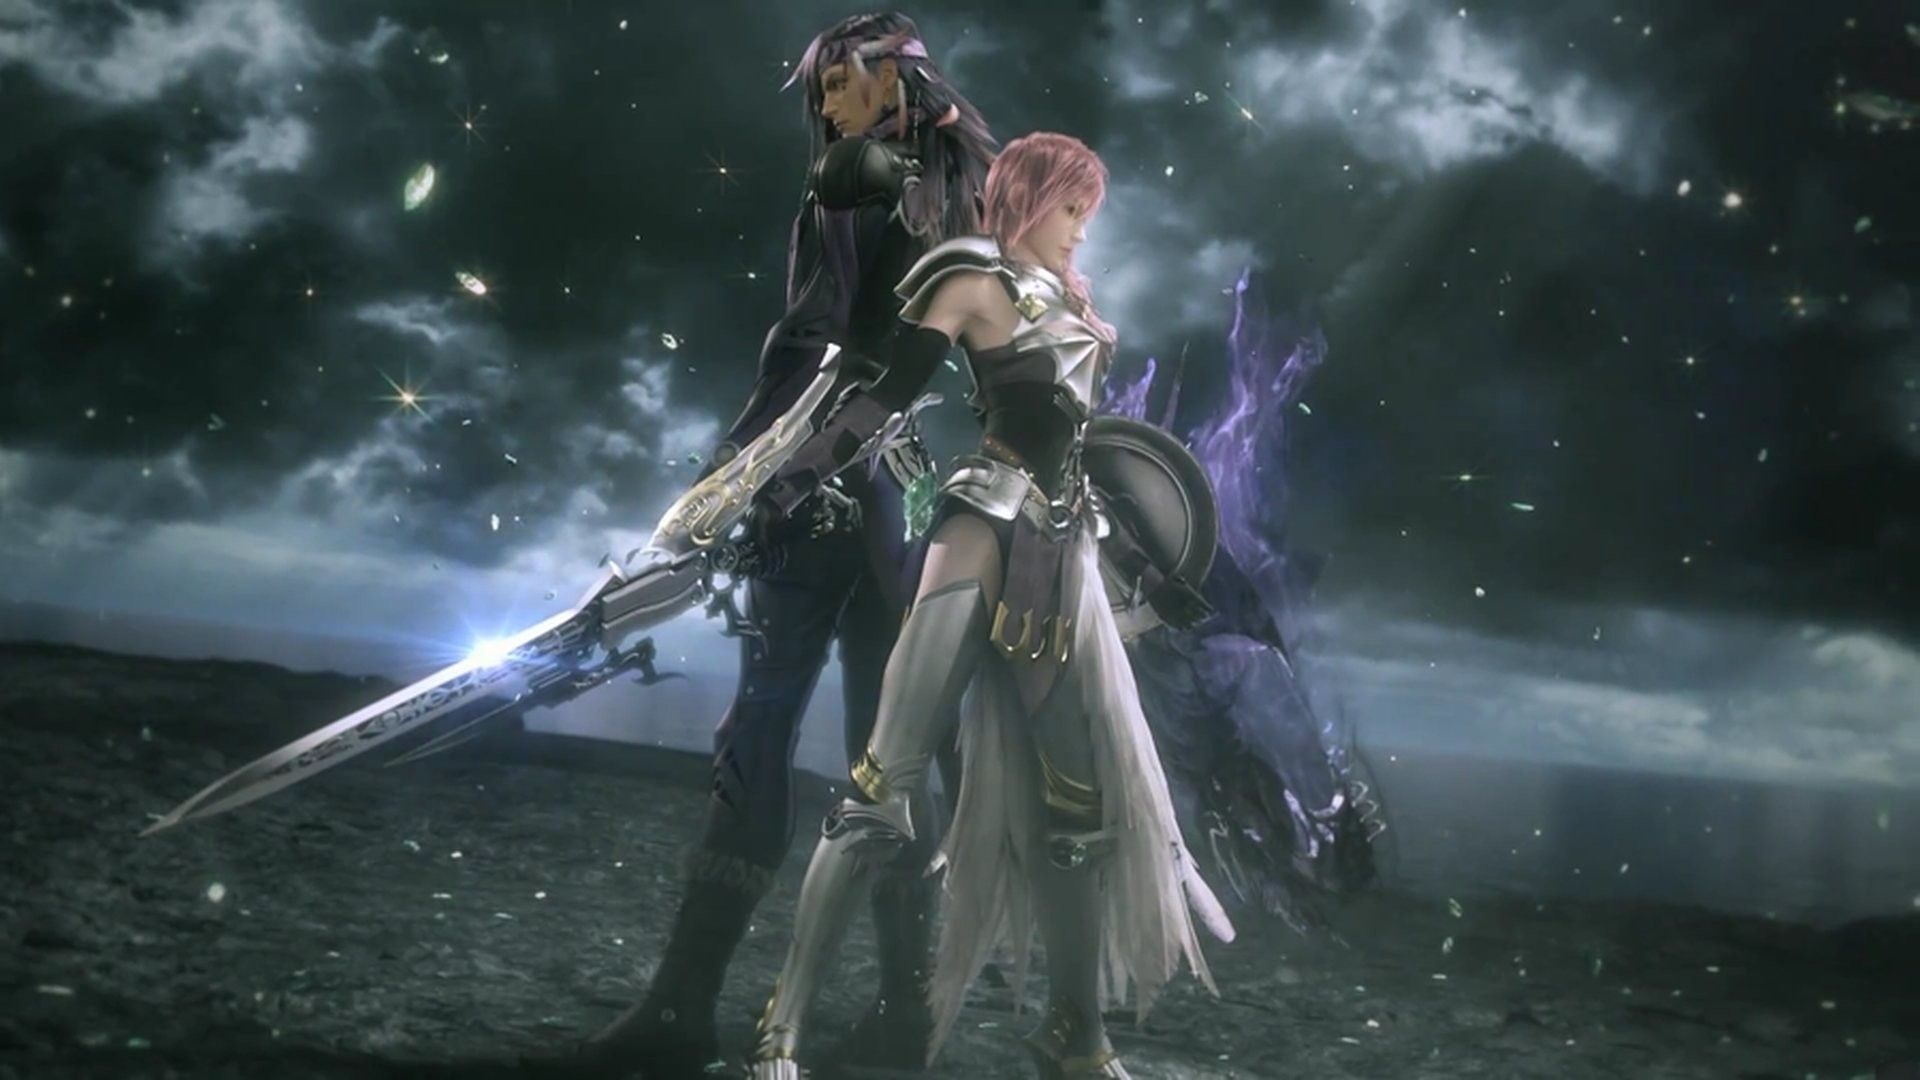 Final Fantasy XIII Wallpaper 1080p